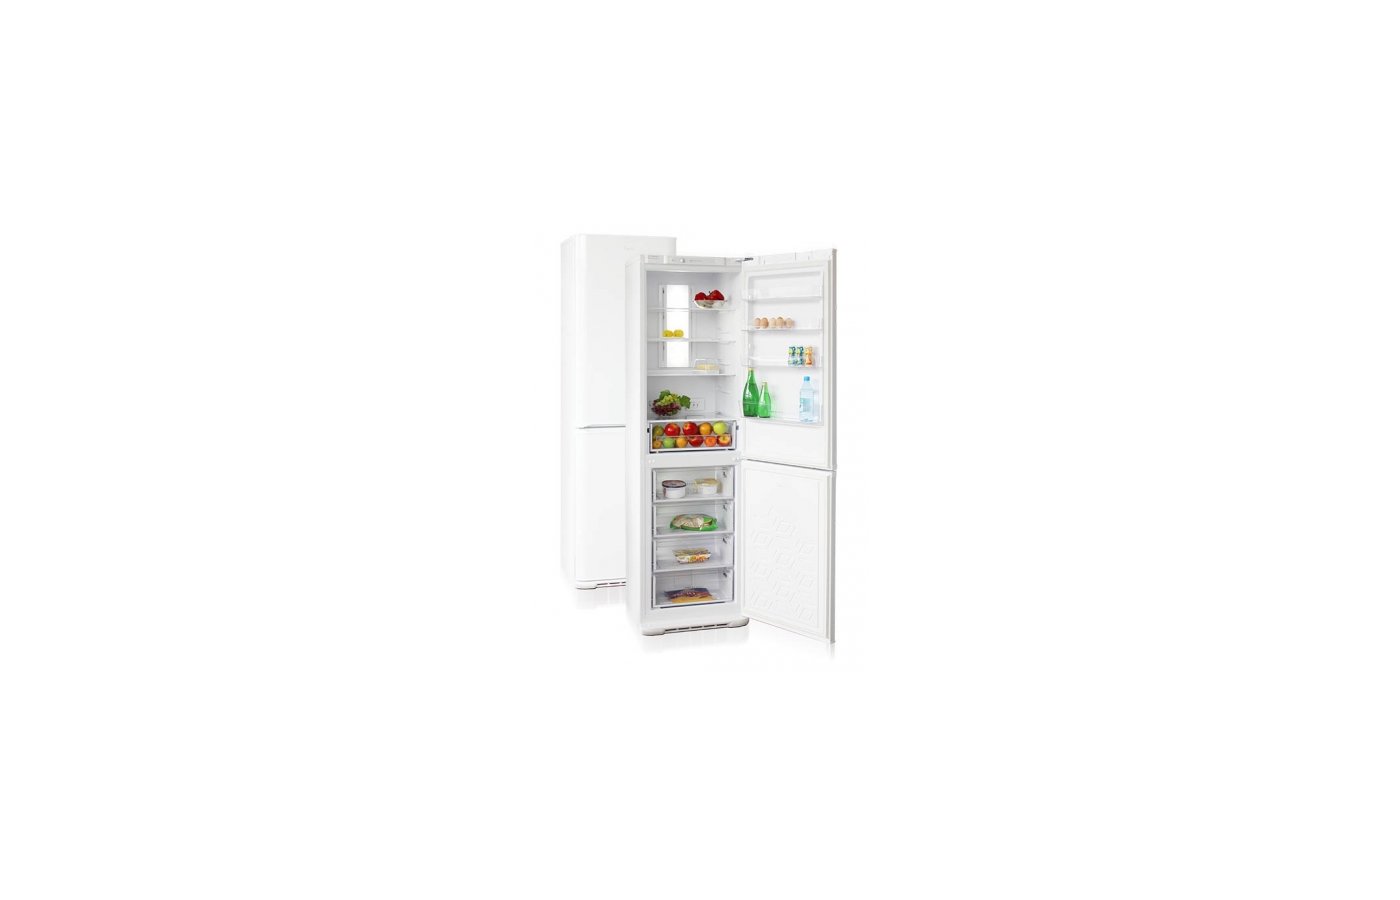 Бирюса 380nf. Холодильник Бирюса 380nf. Бирюса 340nf. Двухкамерный холодильник Бирюса 380nf. Холодильник Бирюса 340nf белый.